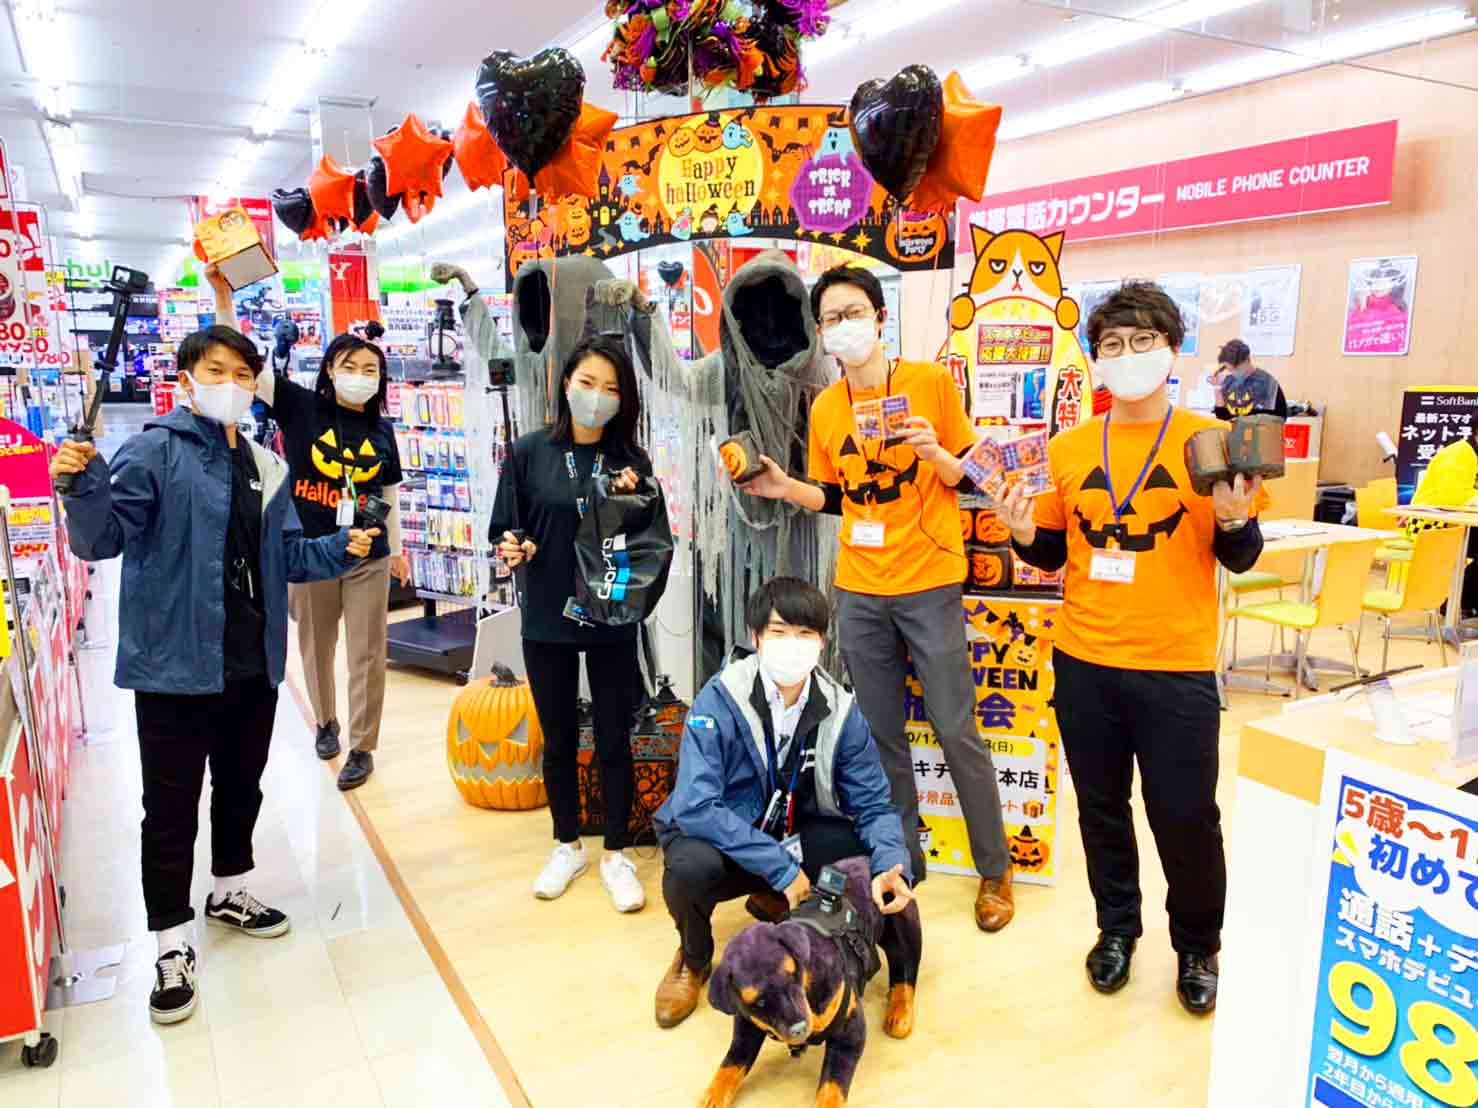 GoProをはじめよう! タッチ&トライ（+お得な即売会）イベントを、10/17(土)、18(日)「デンキチ　三鷹本店」で開催しました!